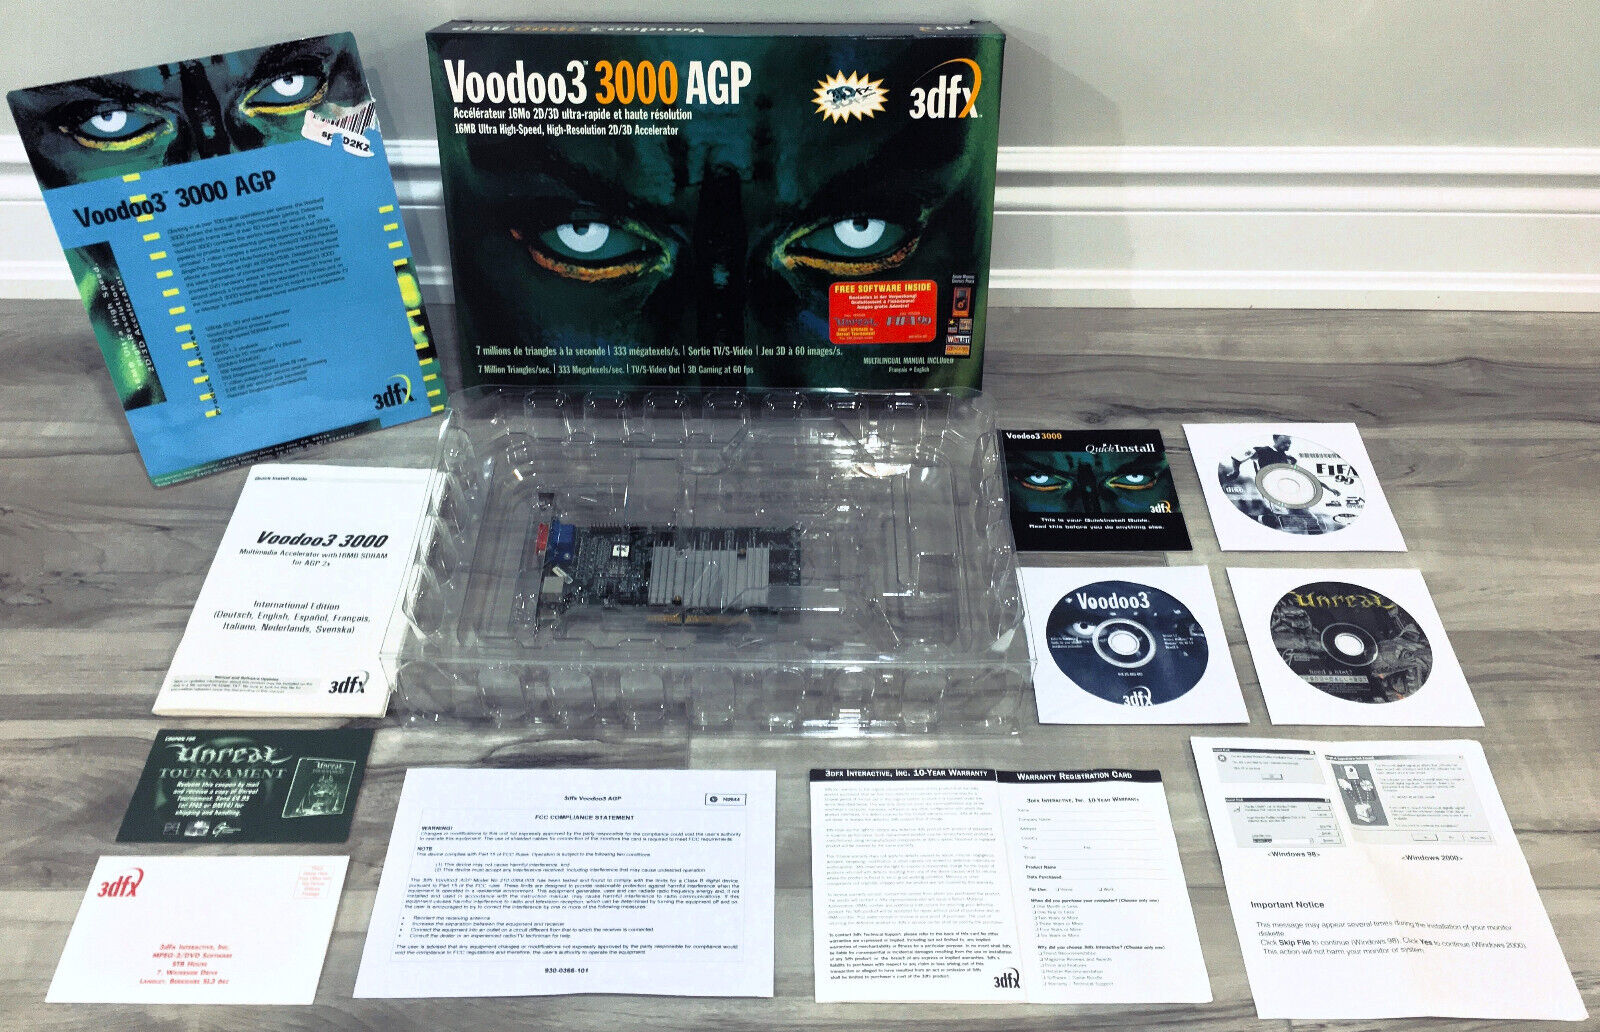 3dfx Voodoo3 3000 AGP 16MB Graphics Card, 2 Full Games, Dual TV Outputs, Poster